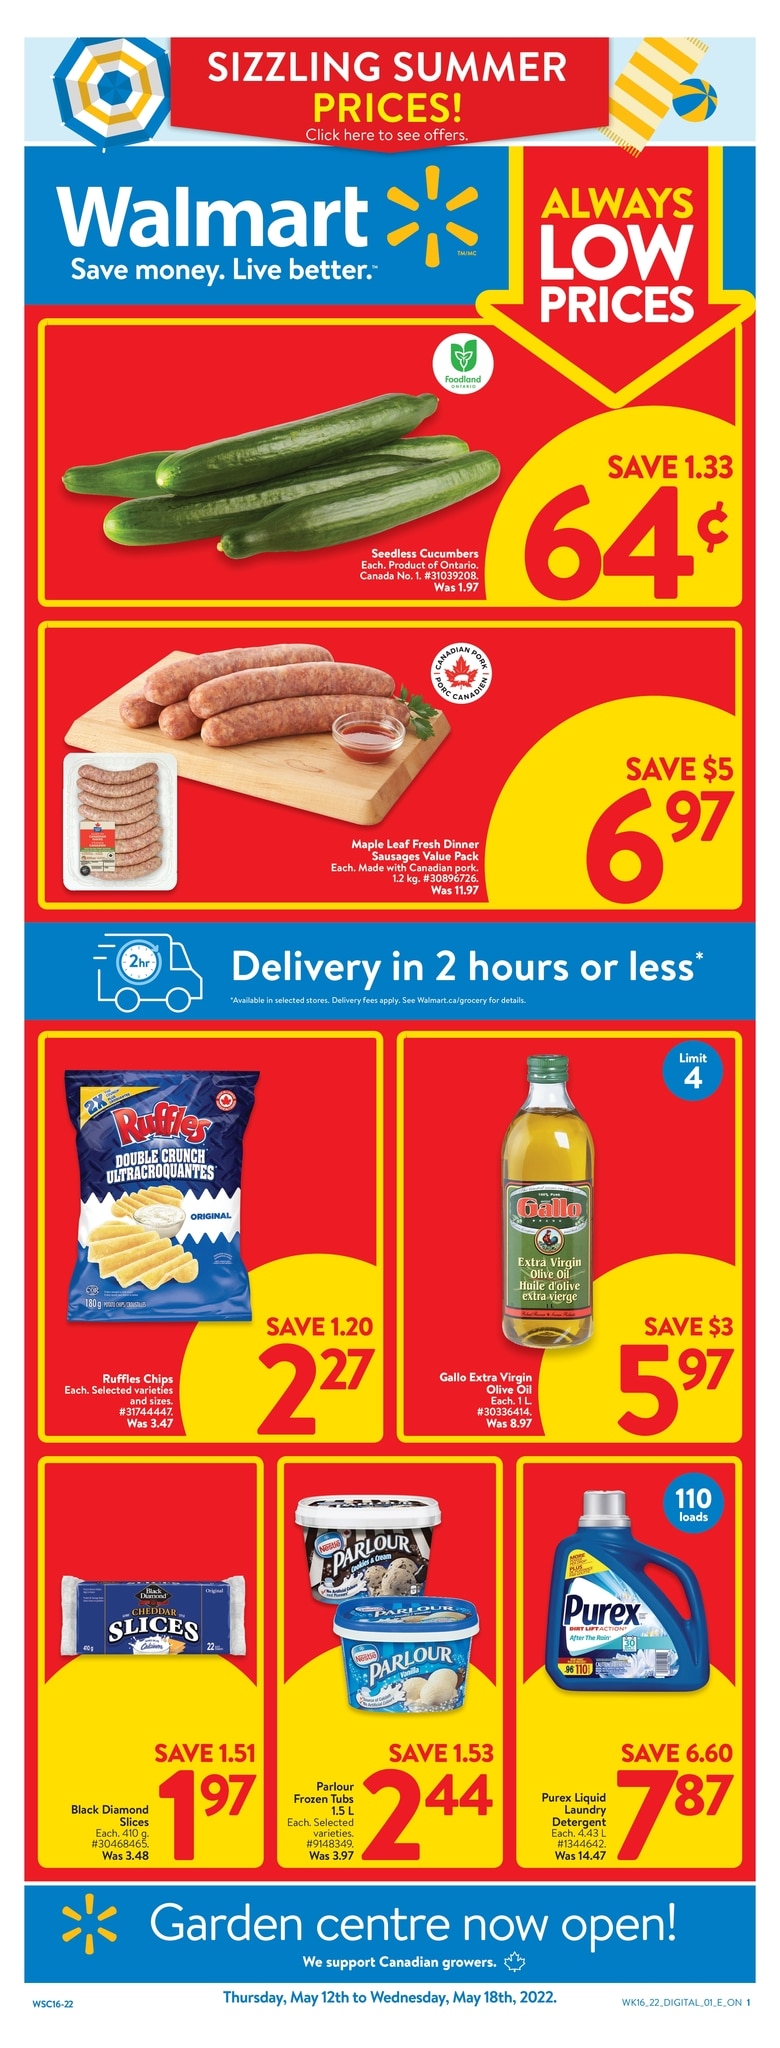 Walmart - Weekly Flyer Specials